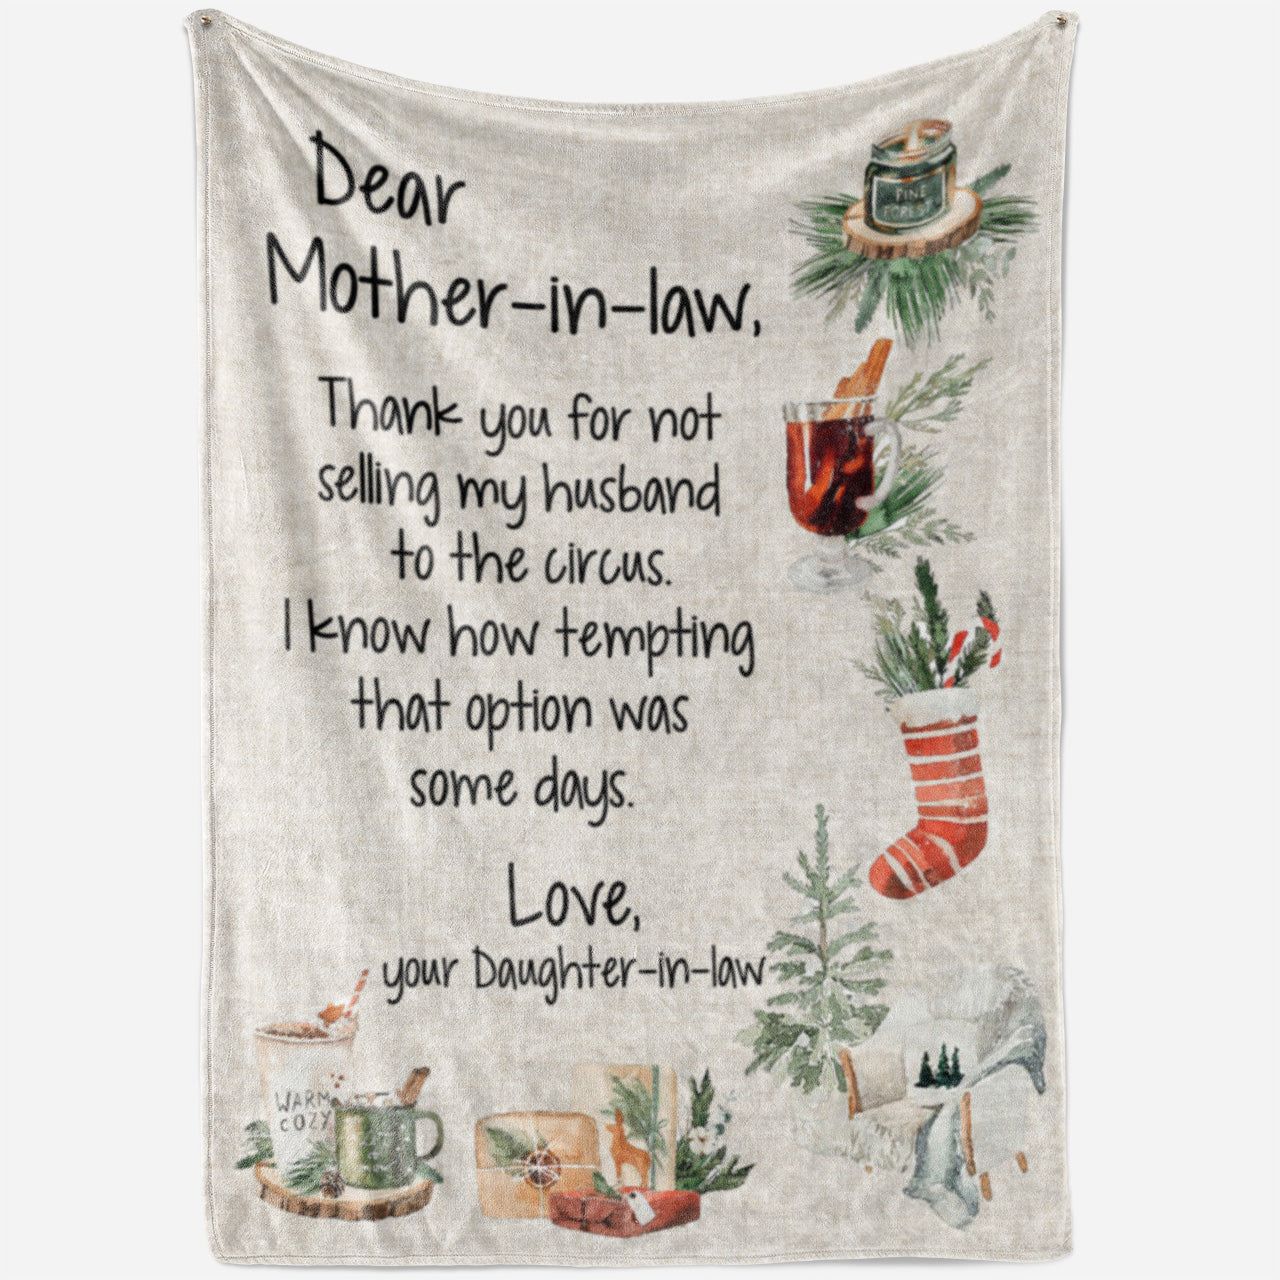 Funny Blanket Christmas Gift Ideas for Mother in Law 2011281 - Fleece Blanket